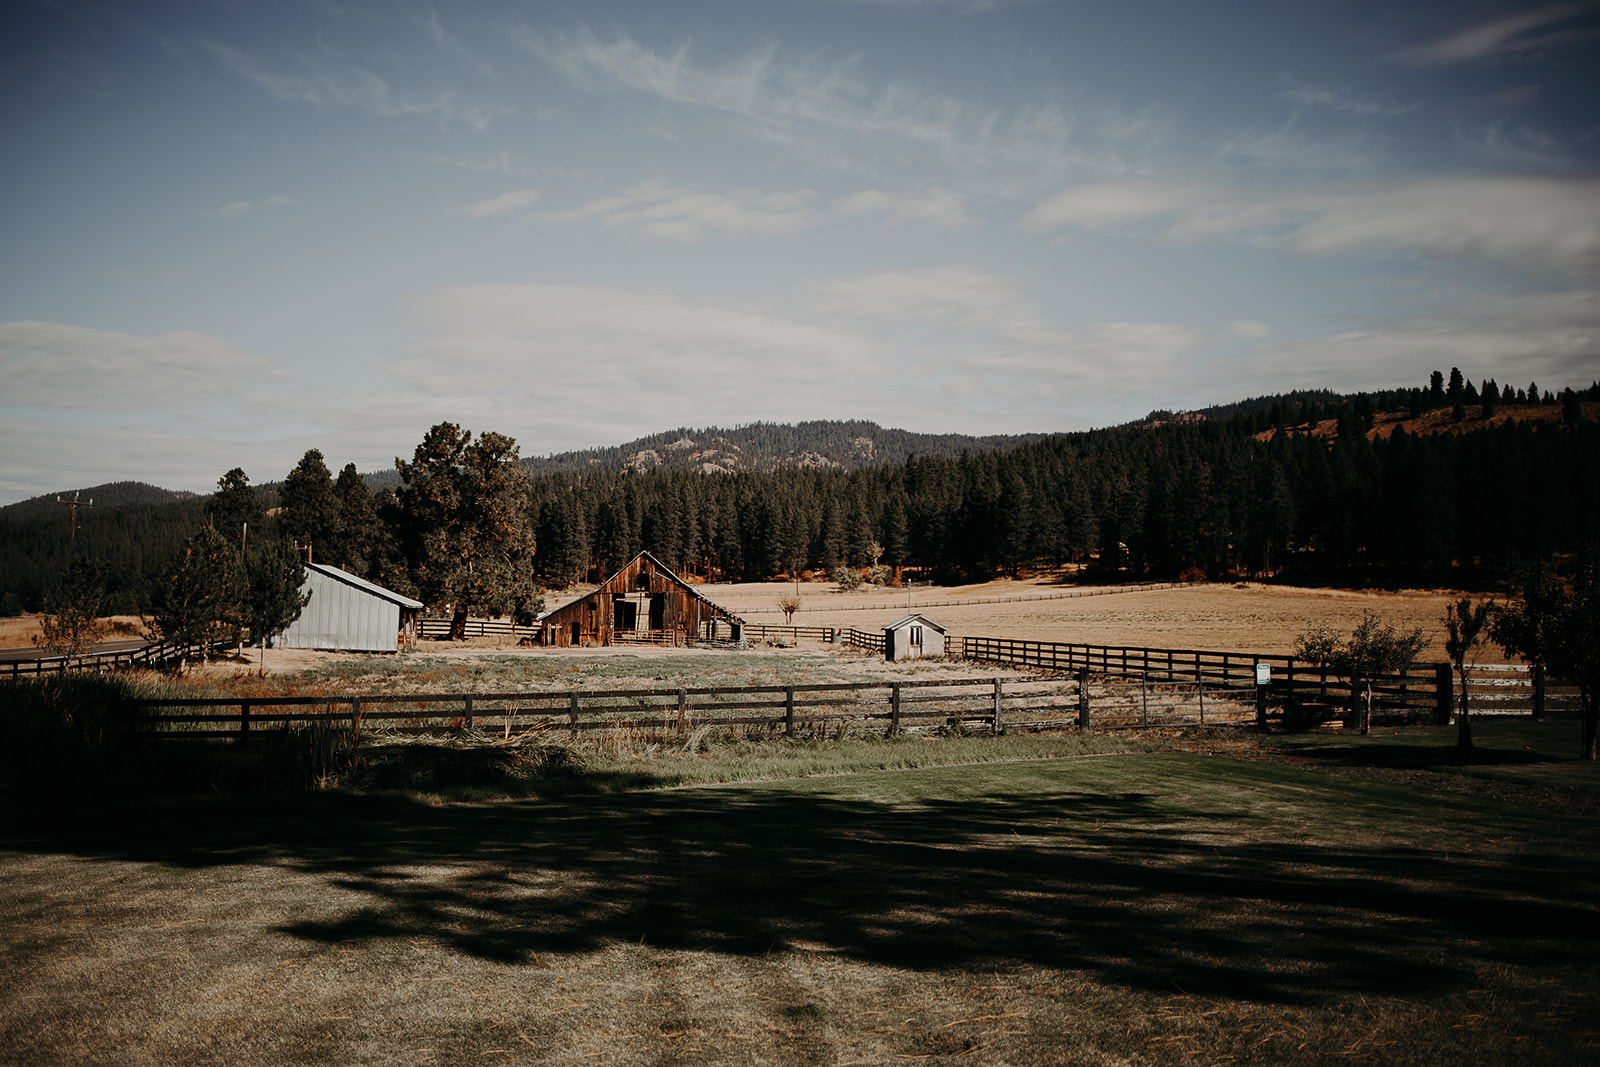 cattle-barn-wedding-cle-elum-wedding-megan-gallagher-photography-winston-salem-photographer (59).jpg